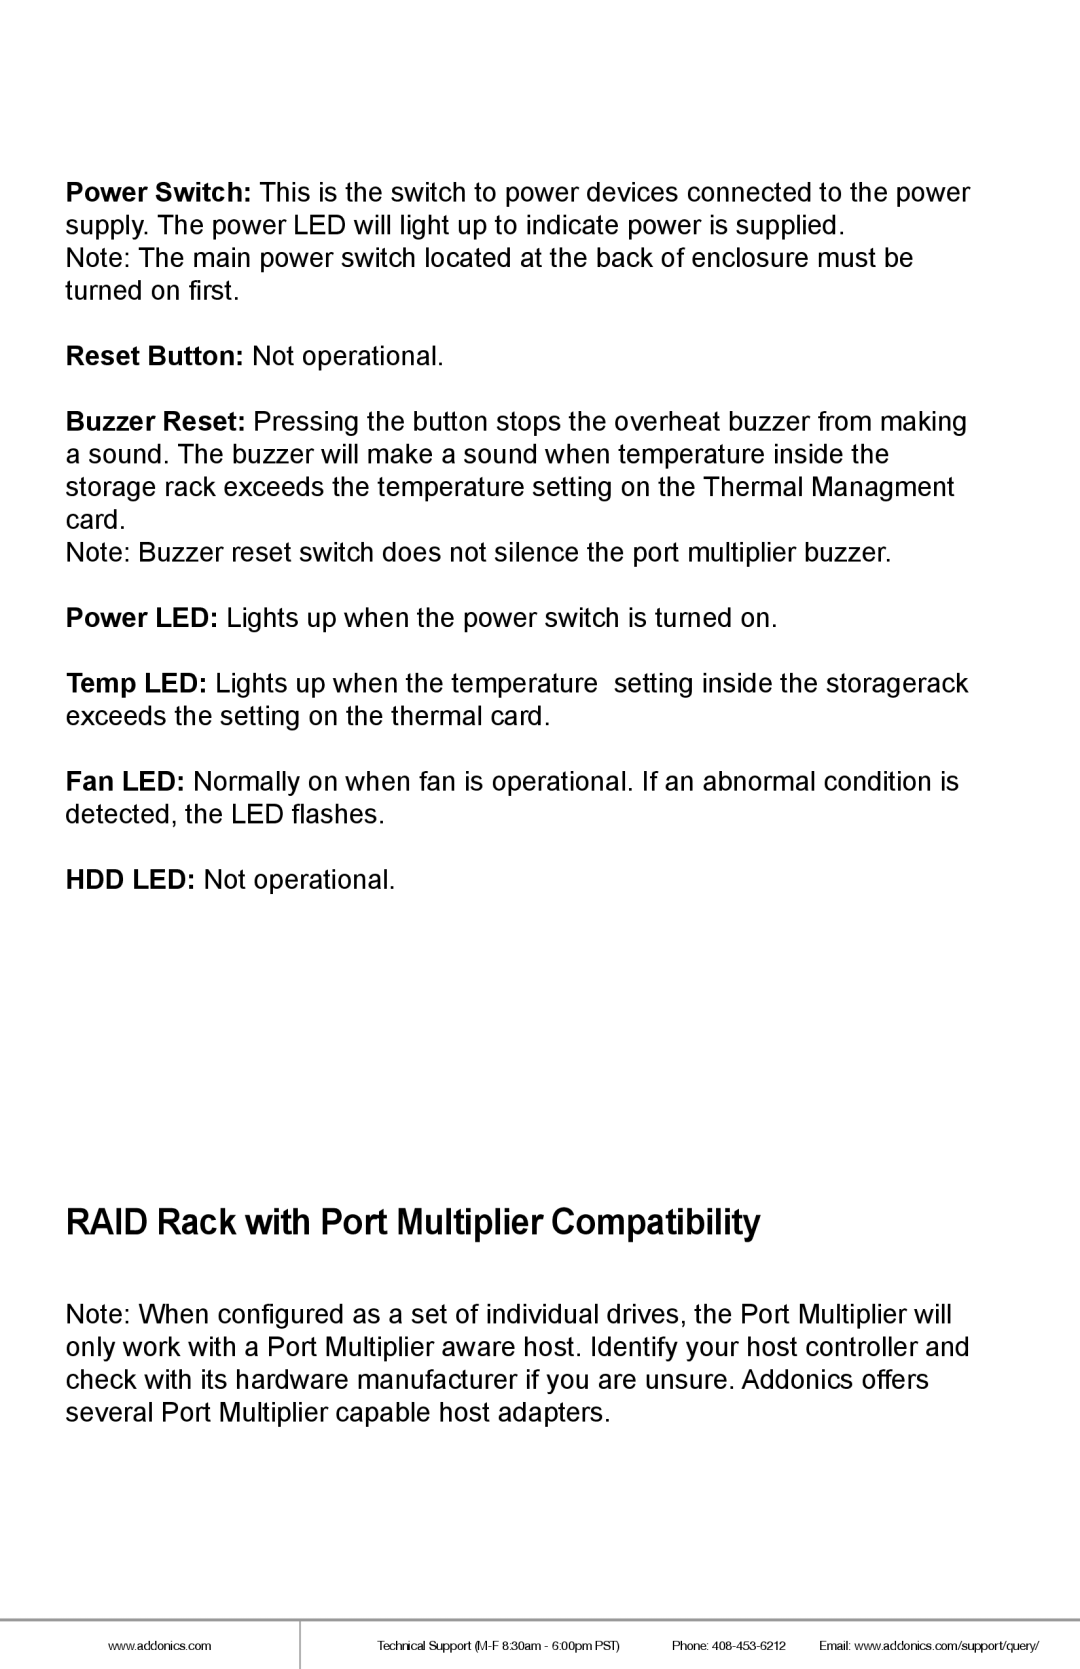 Addonics Technologies RR2035ASDML manual RAID Rack with Port Multiplier Compatibility 